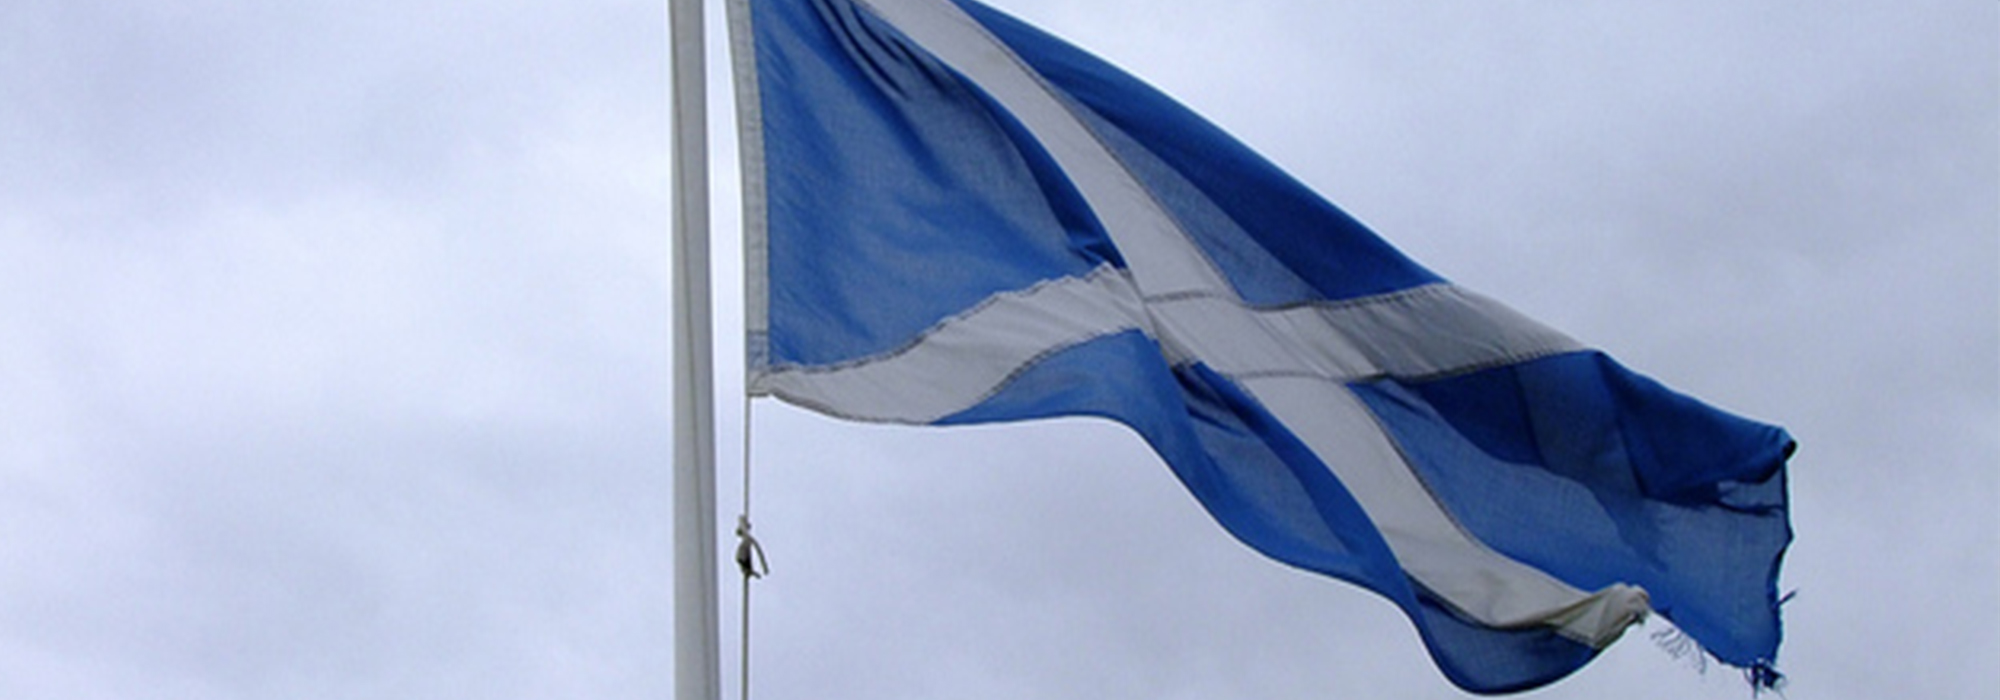 Scottish independence referendum: Canada reacts